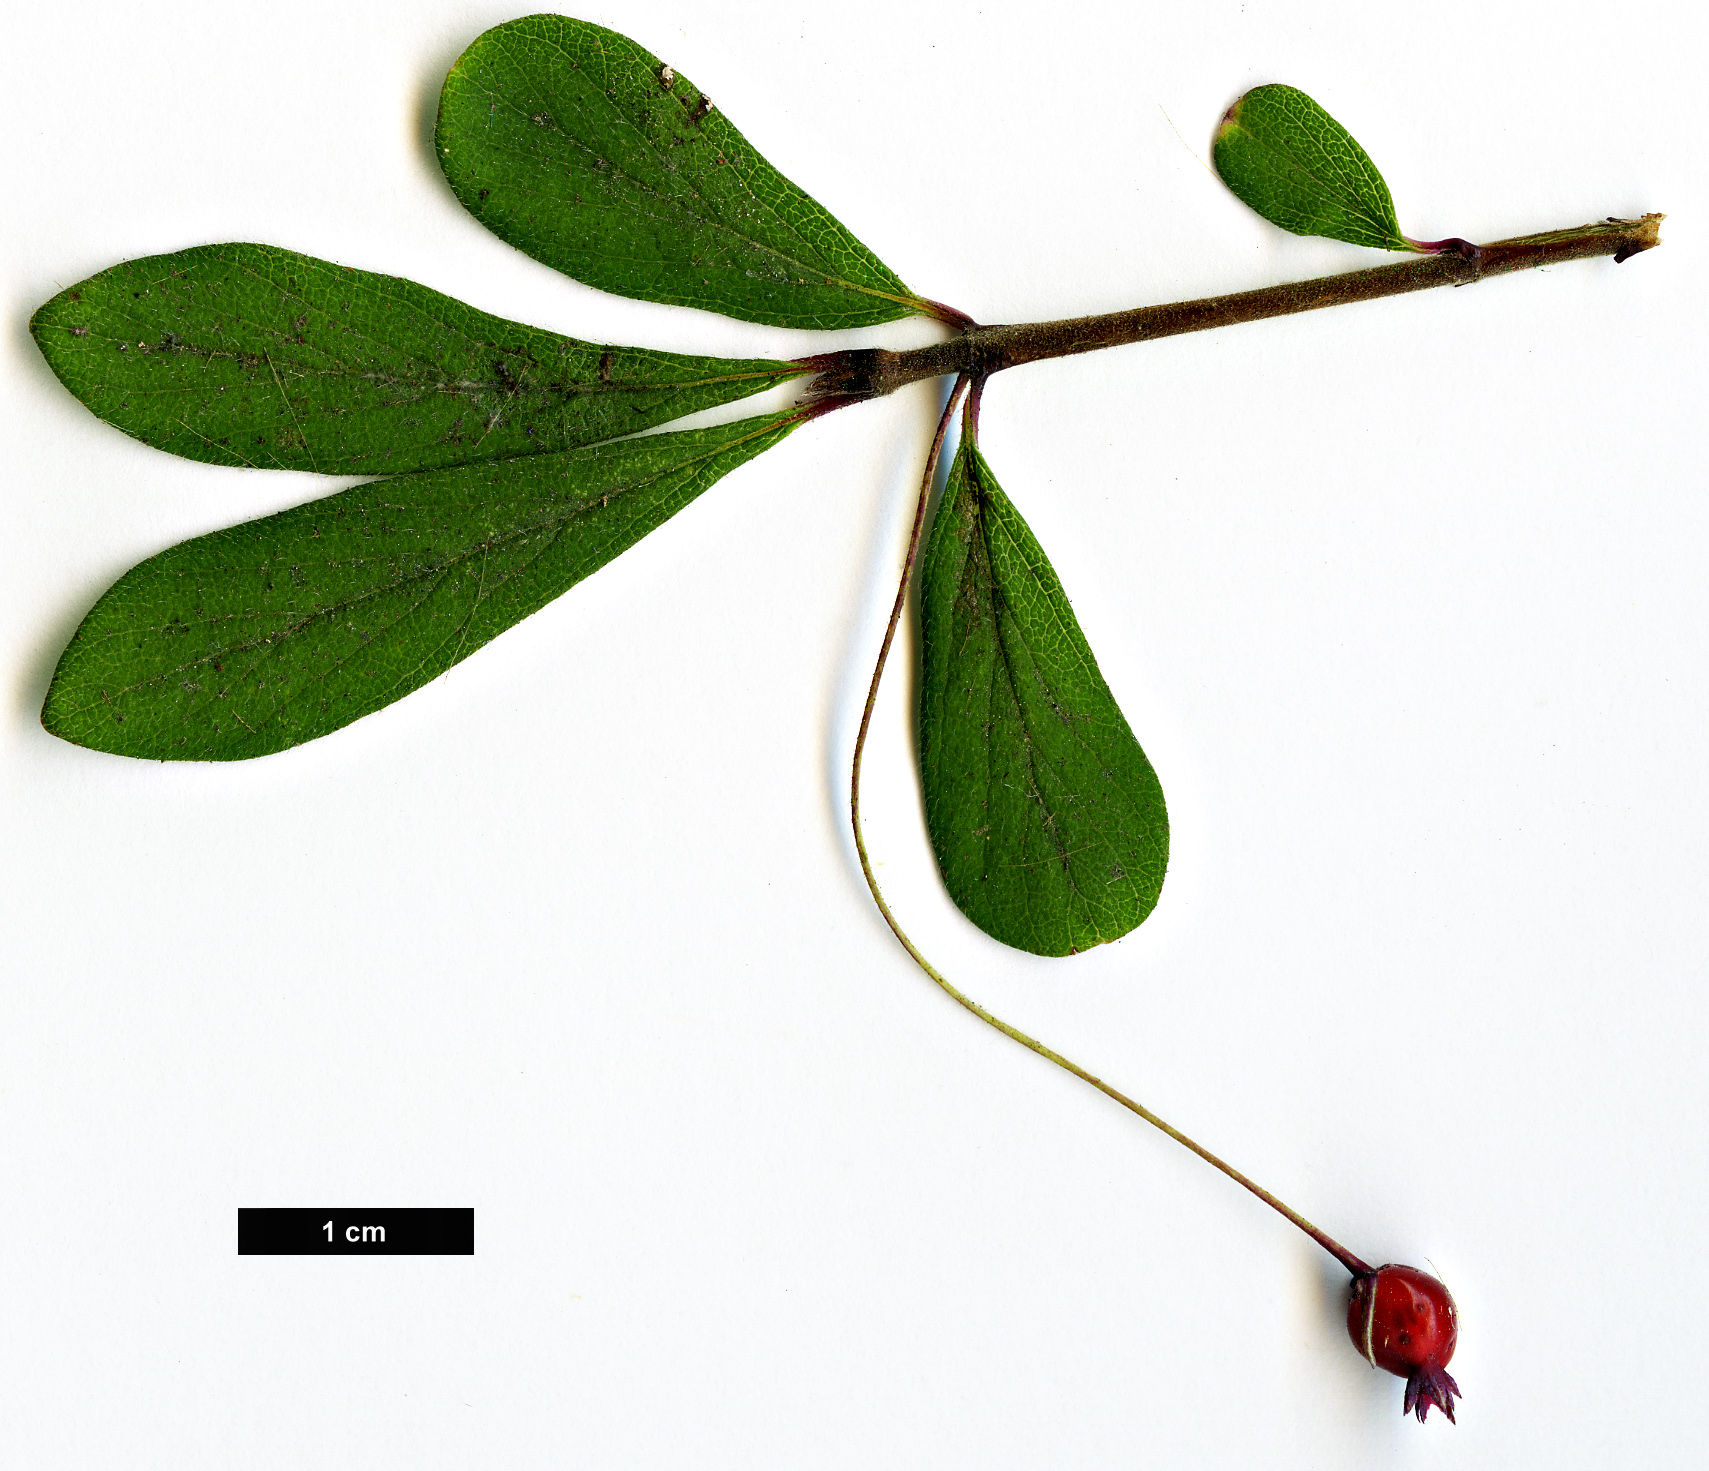 High resolution image: Family: Caprifoliaceae - Genus: Lonicera - Taxon: tangutica